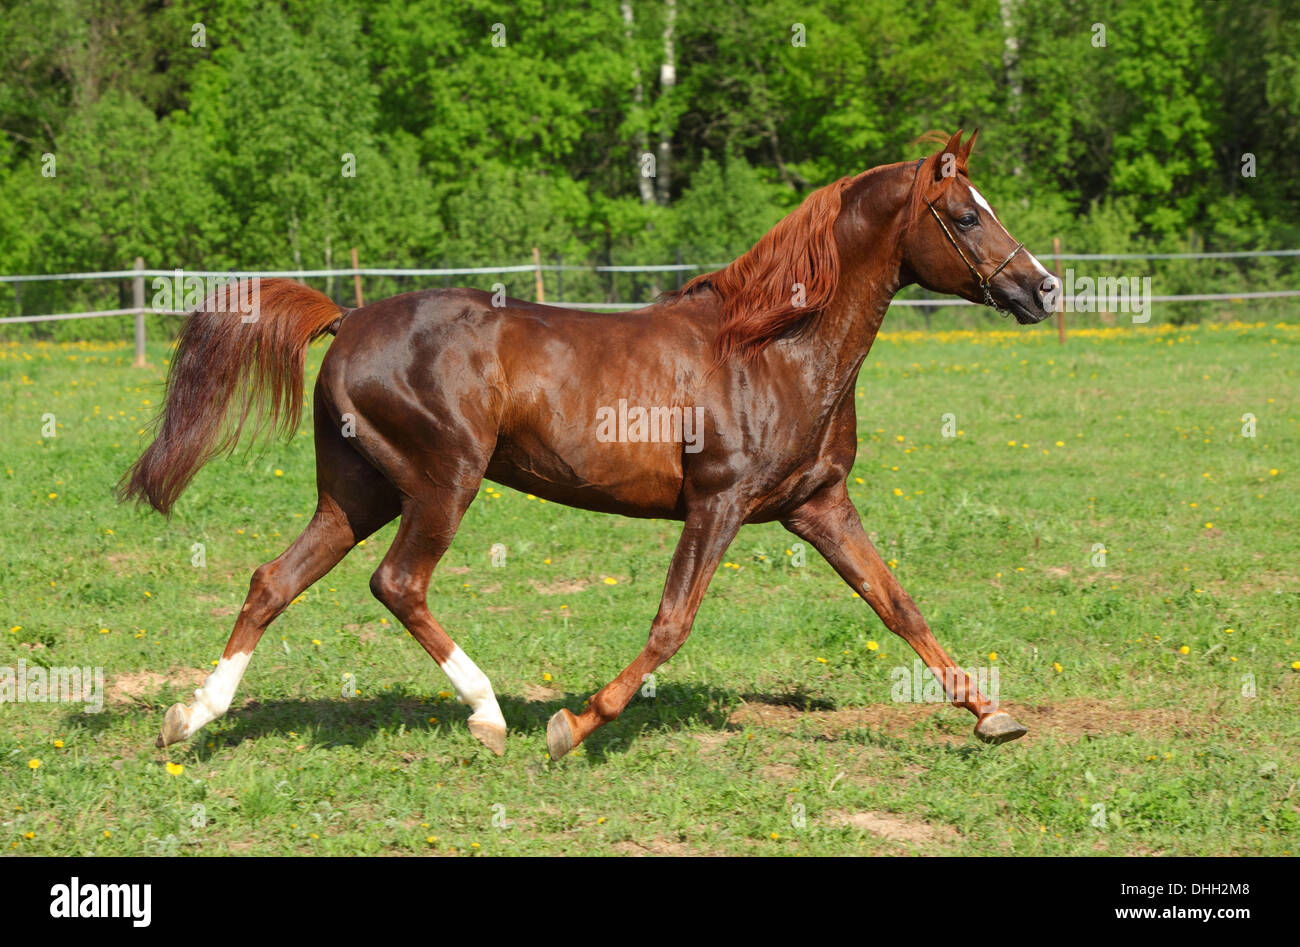 Arabian Horse Chestnut stallion trotting a meadow Stock Photo